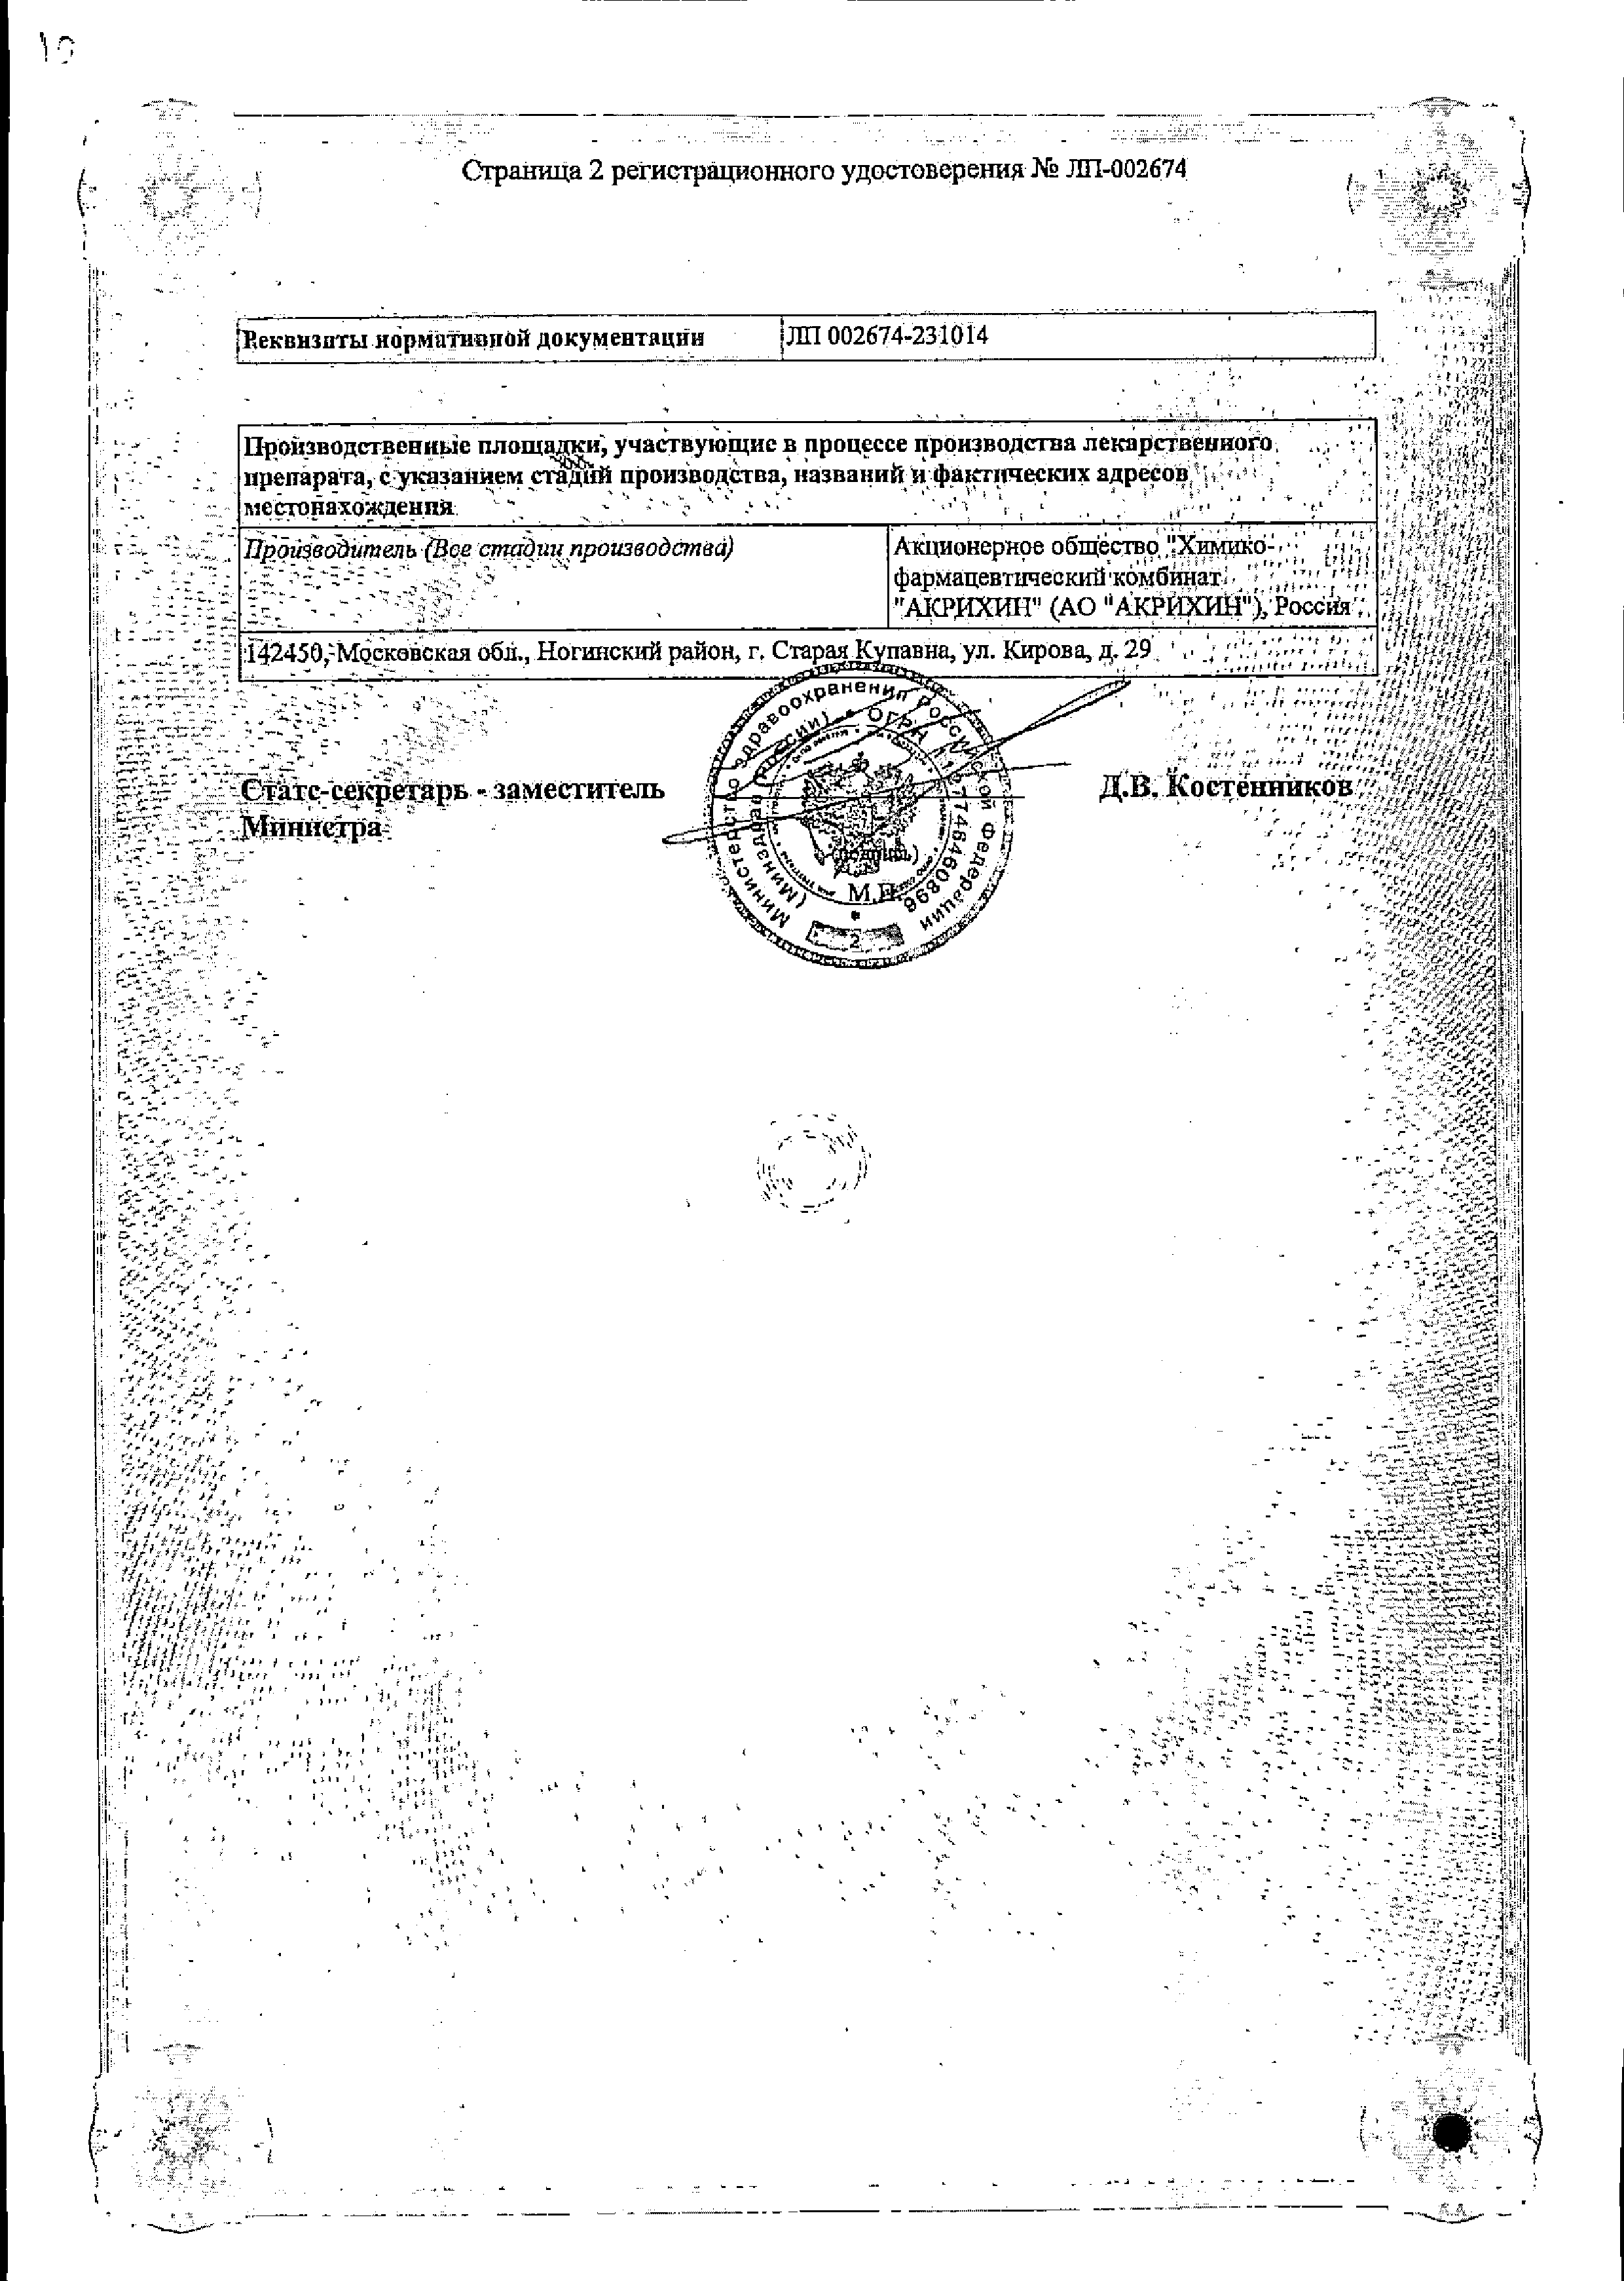 Метформин Пролонг-Акрихин сертификат